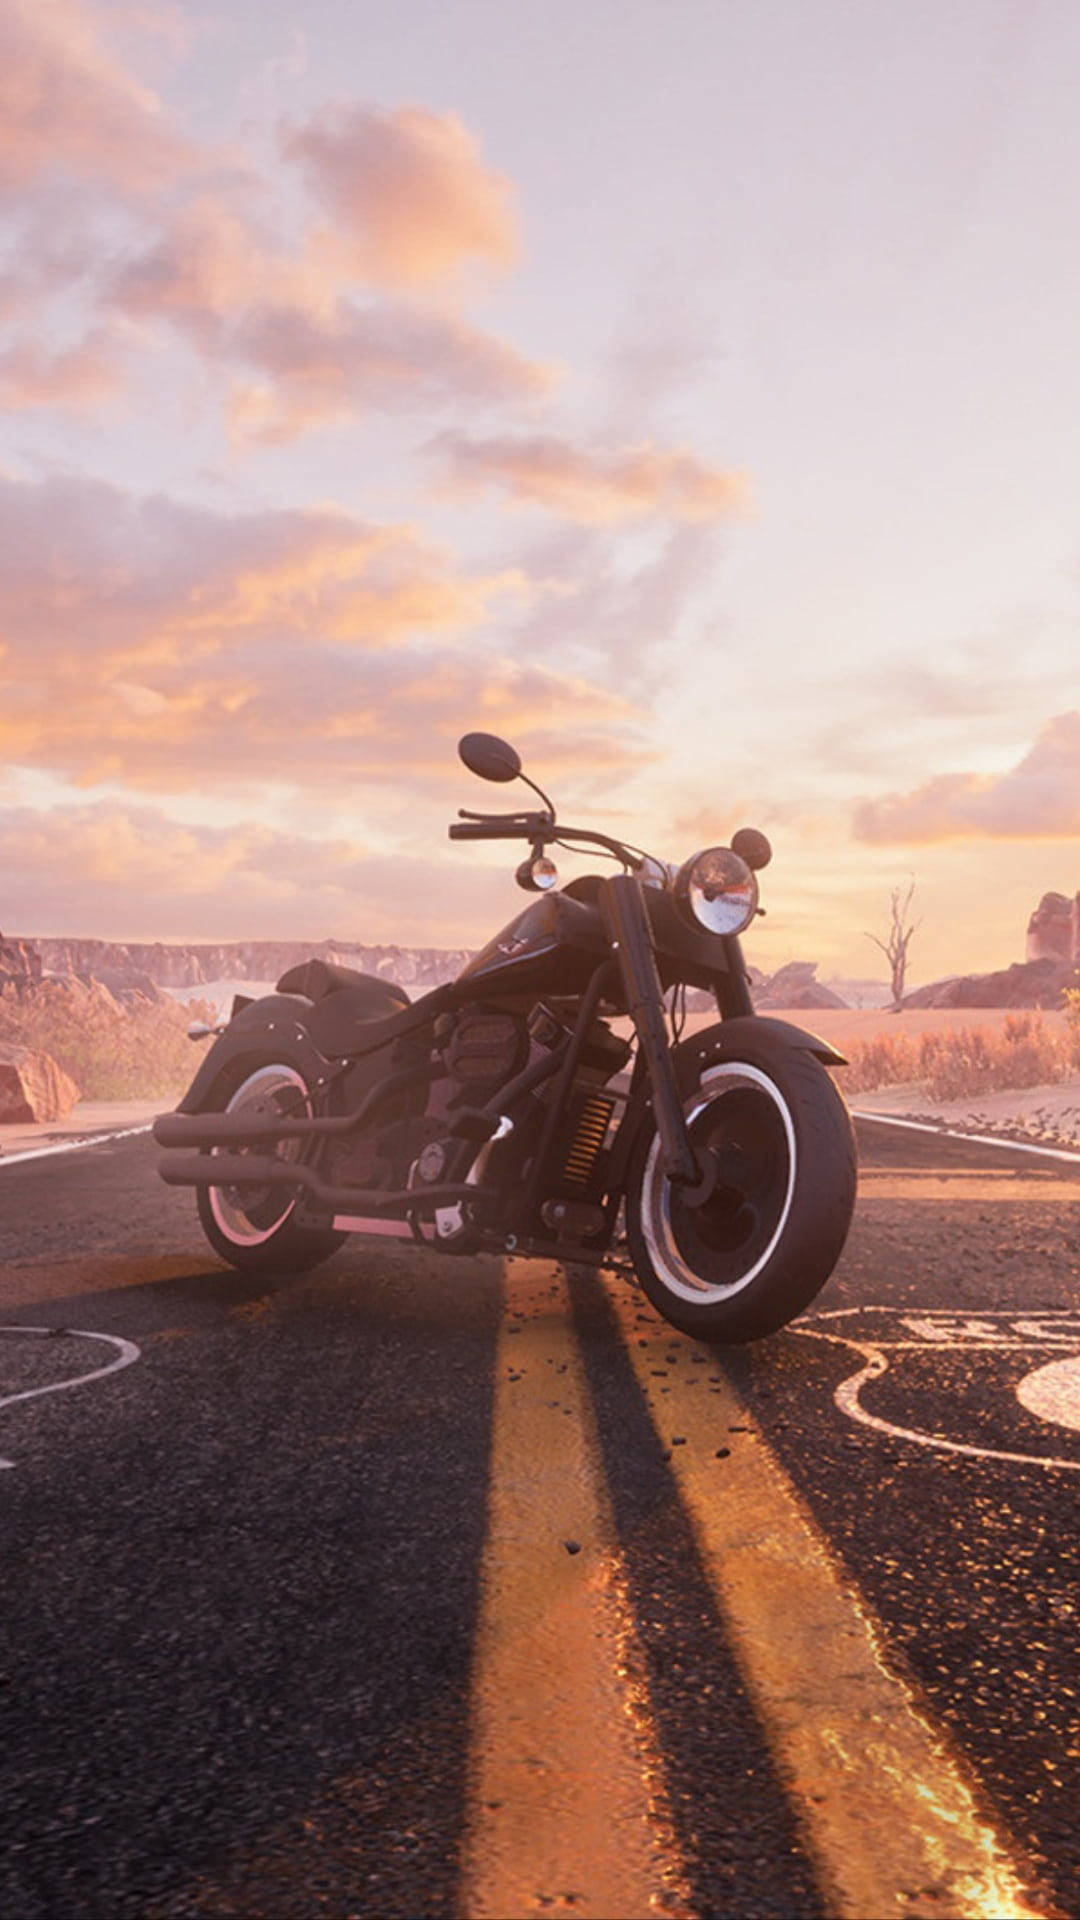 Sunset Sky Harley Davidson Mobile Wallpaper